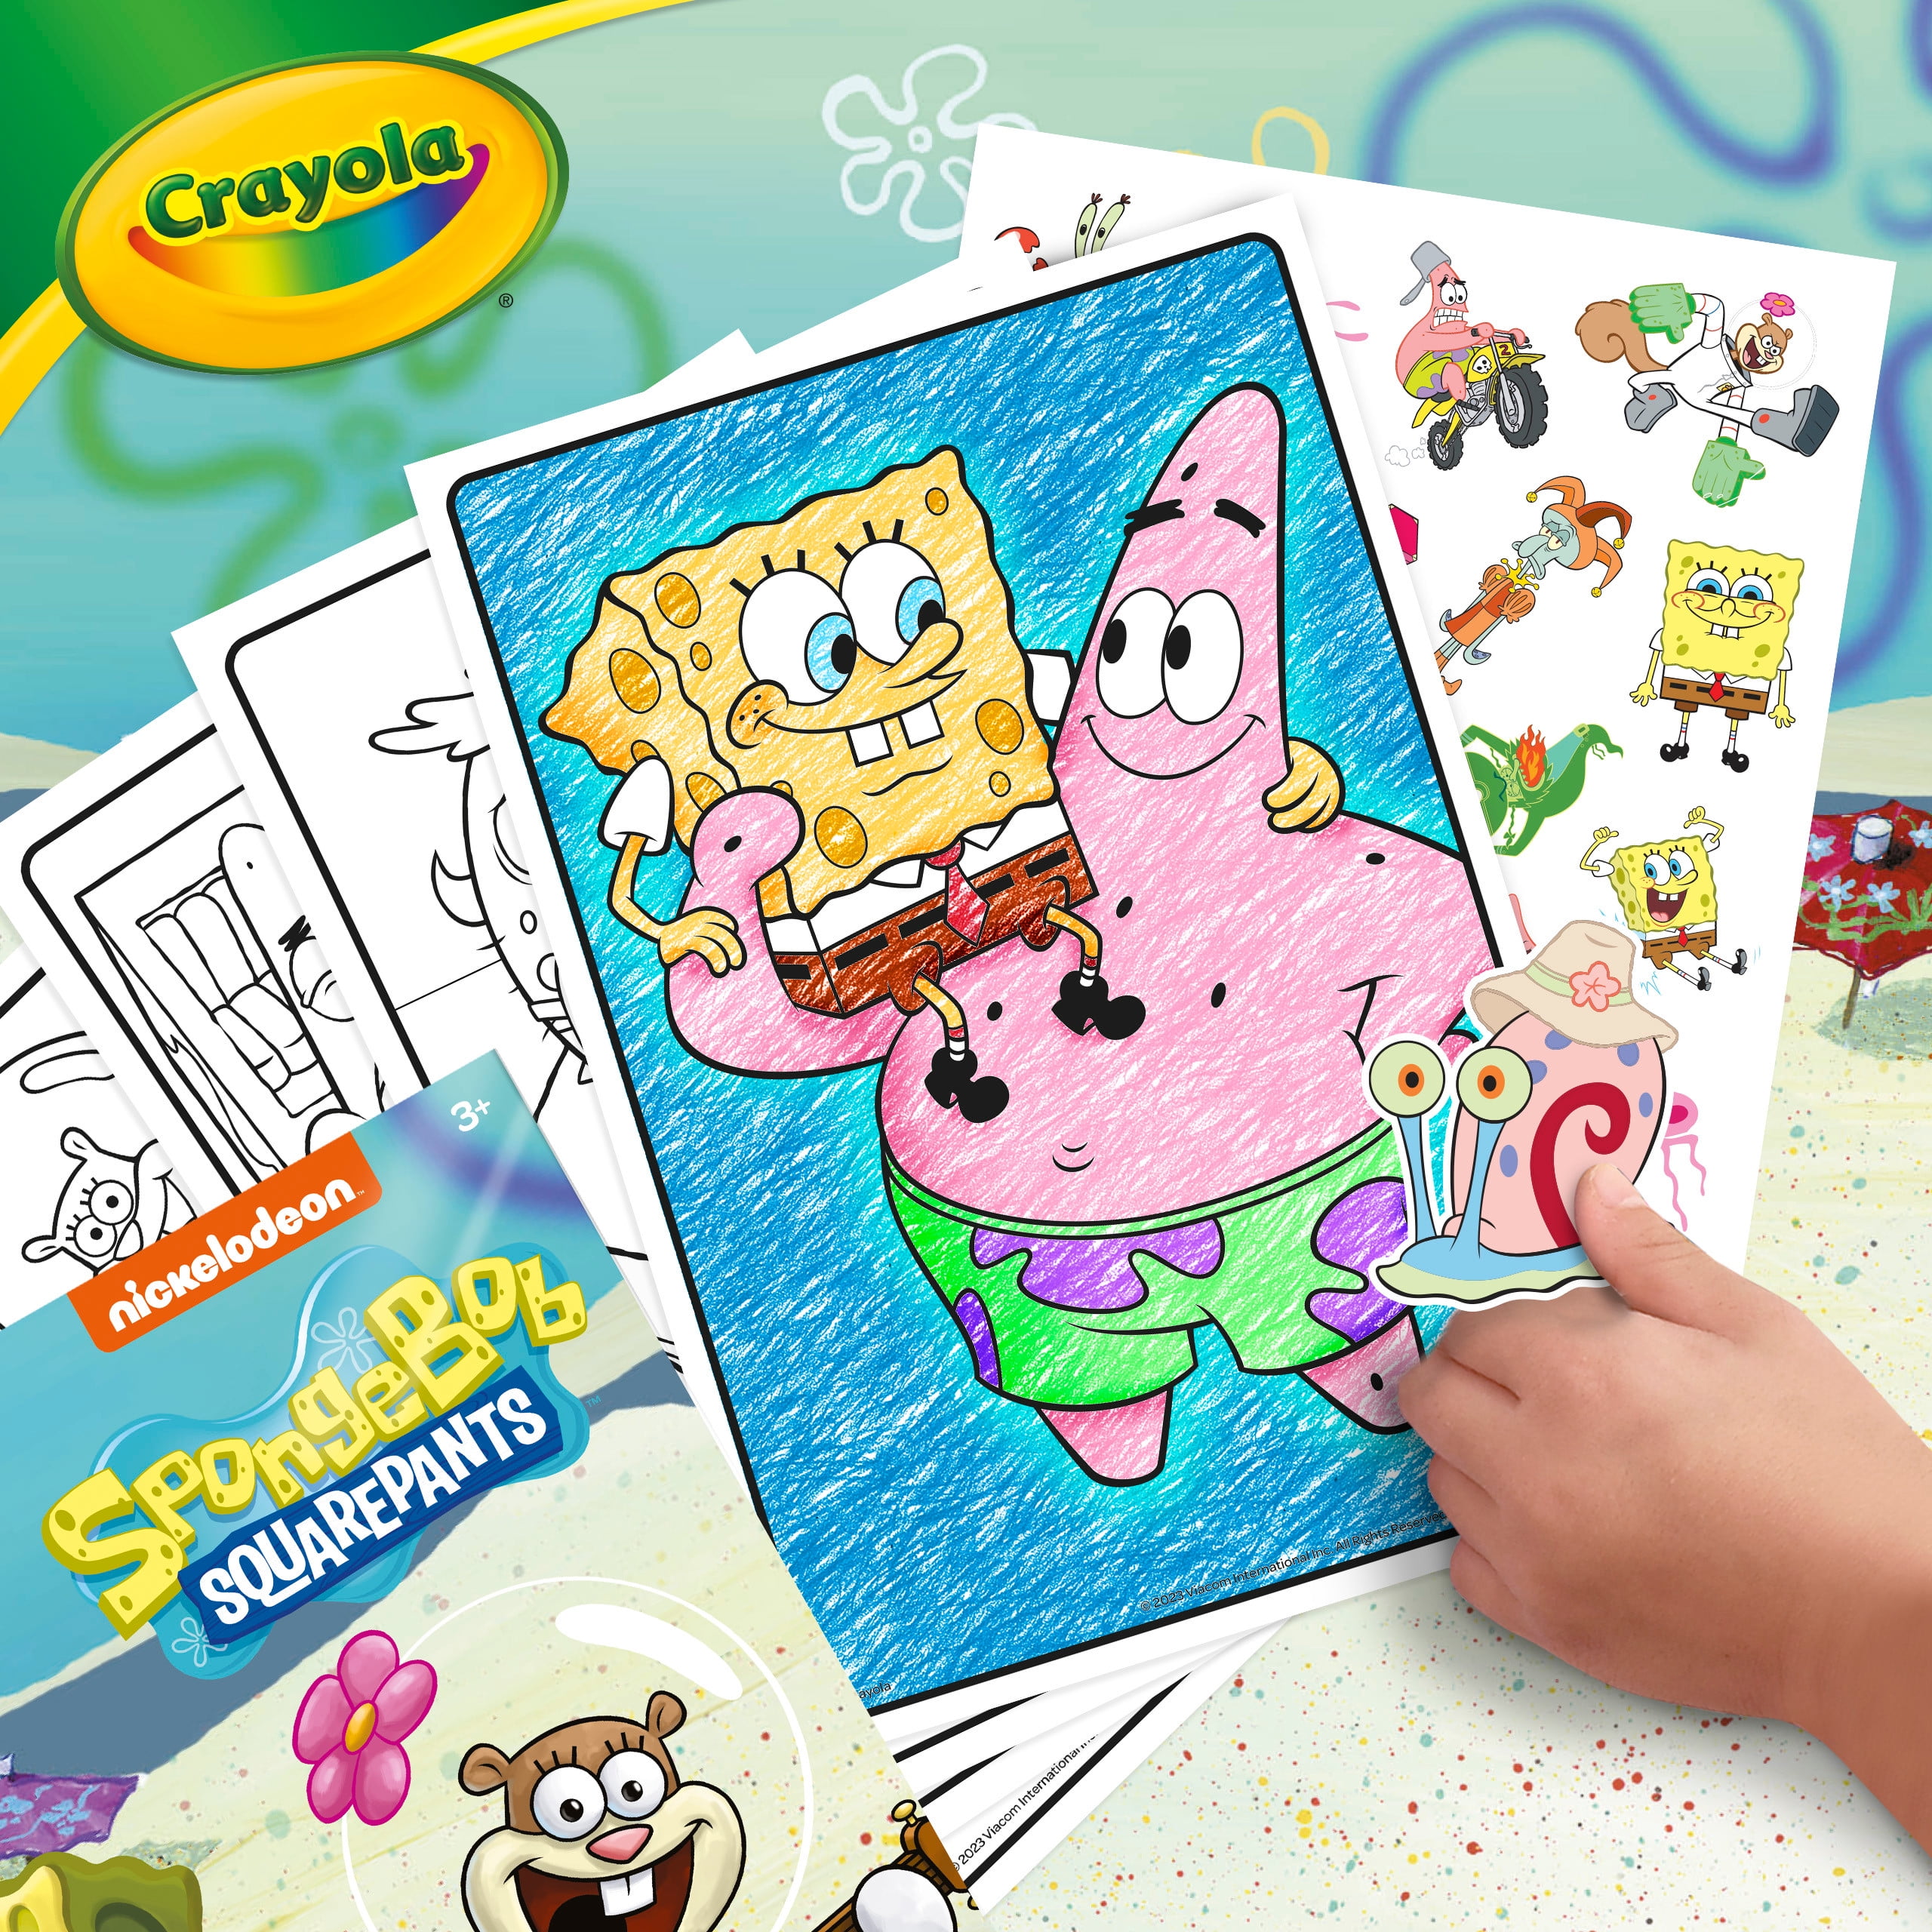 Spongebob Coloring Pages Part 1 - Spongebob Coloring Book 